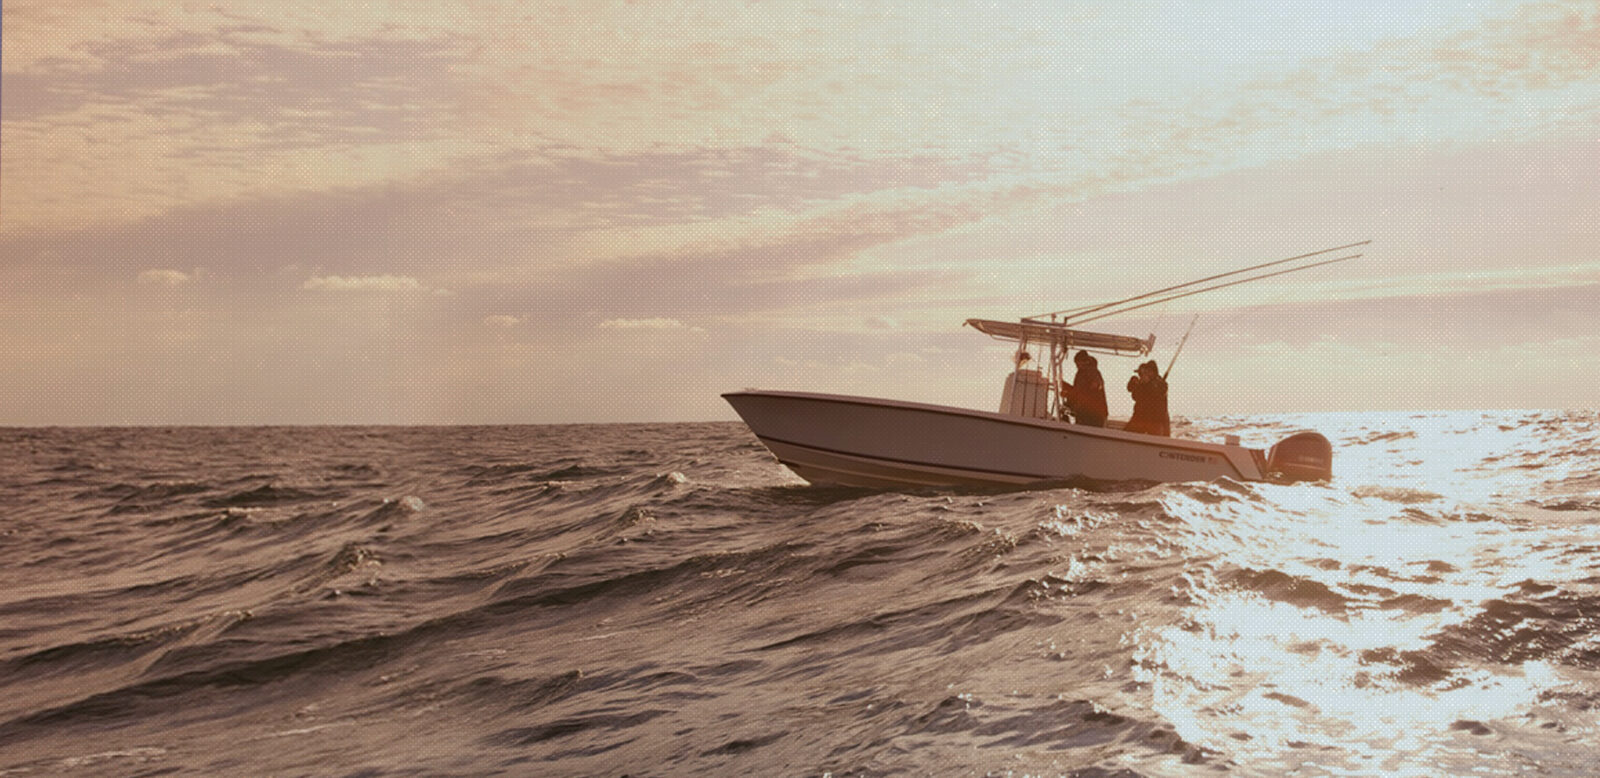 Contender 28T Boat Giveaway - CCA Florida